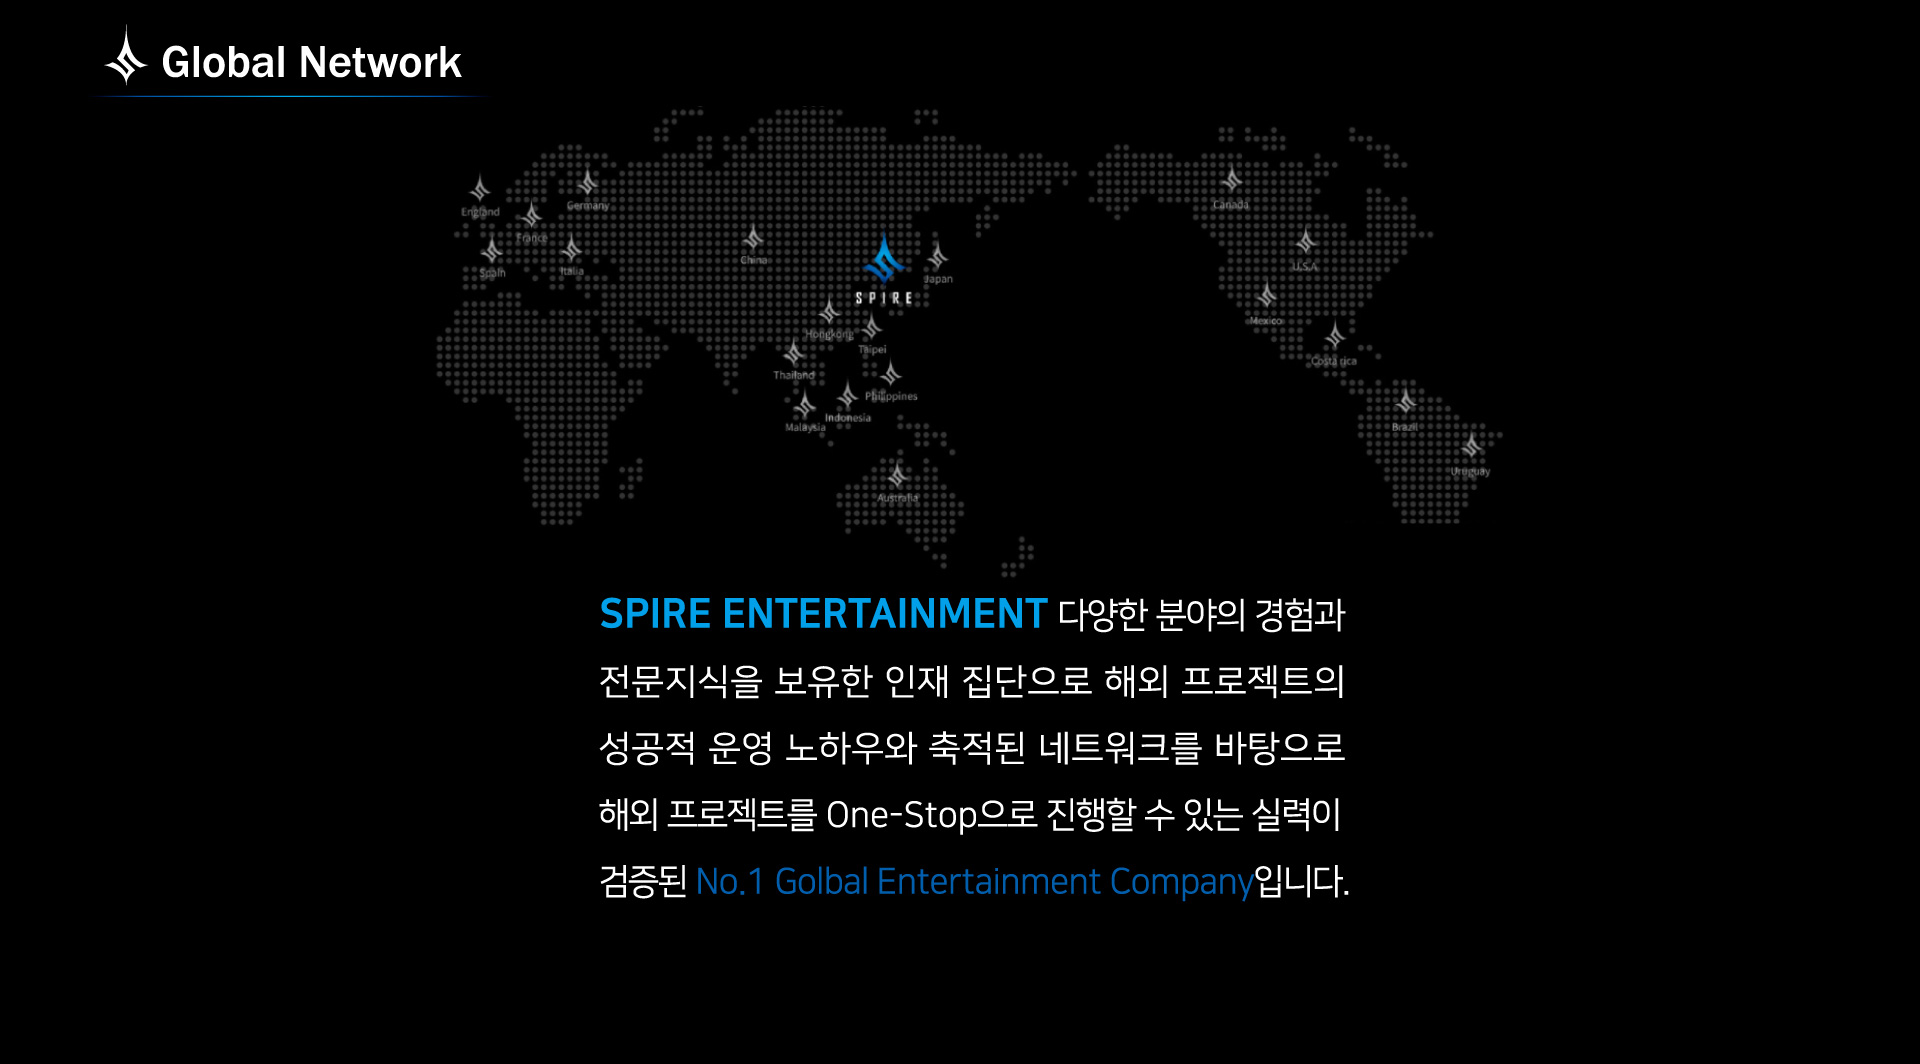 Global Network: spire entertainment 다양한 분야의 경험과 전문지식을 보유한 인재 집단으로 해외 프로젝트의 해외 프로젝트를 one-stop으로 진행할 수 있는 실력이 검증된 no.1 global entertainment company 입니다.